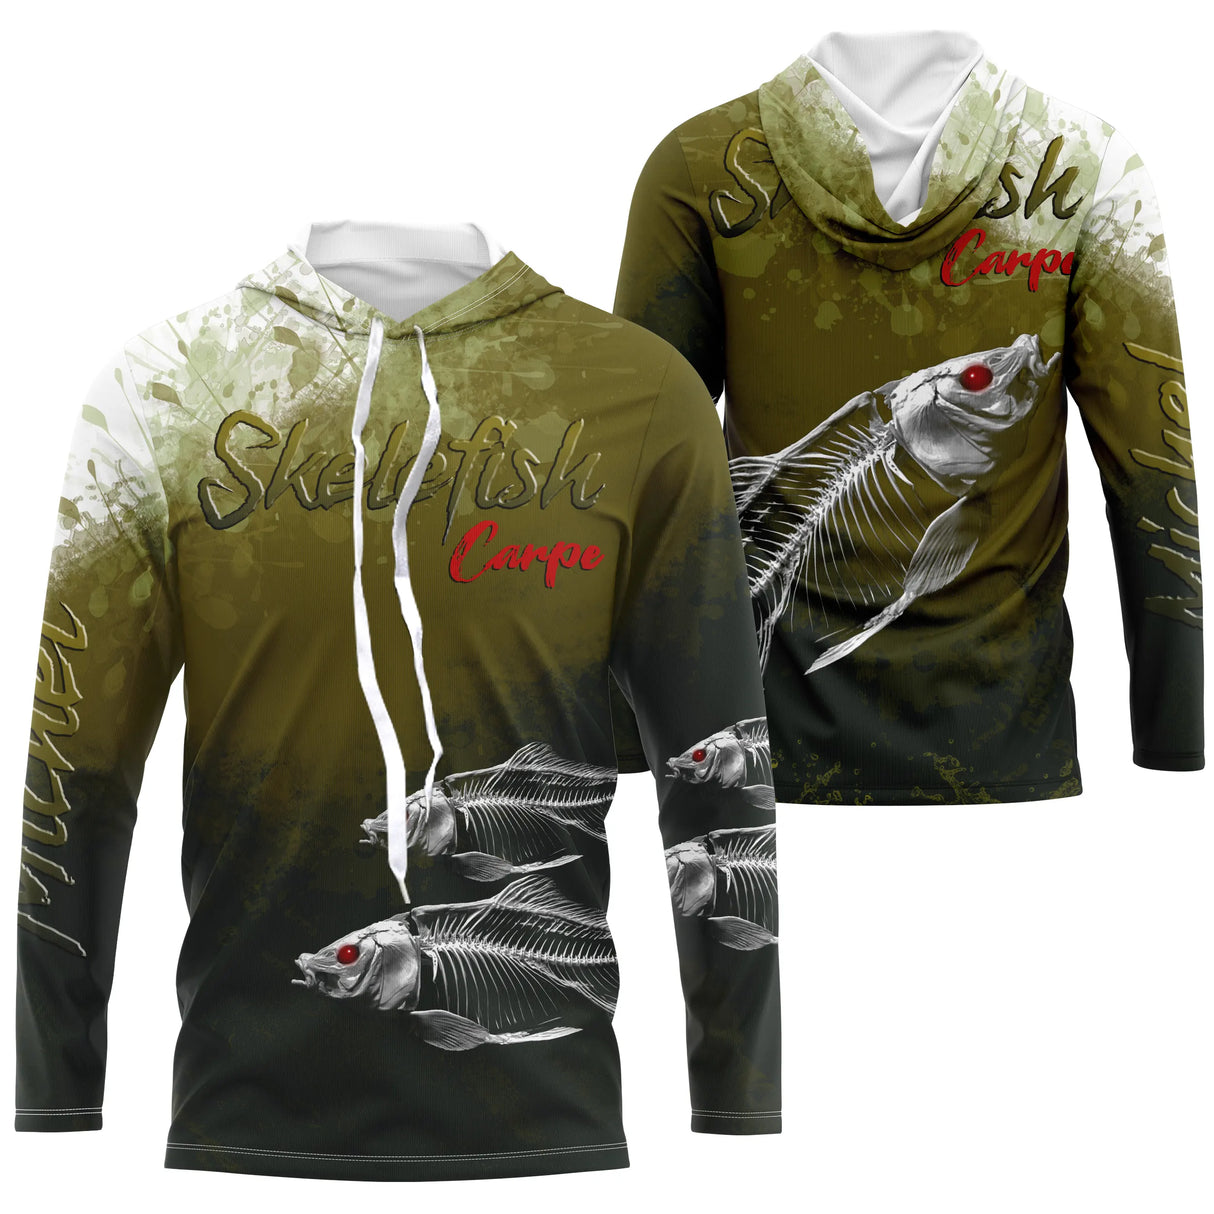 Personalized Anti-UV Fishing T-Shirt, Original Fisherman Gift, Skelefish Carp - CT30072227